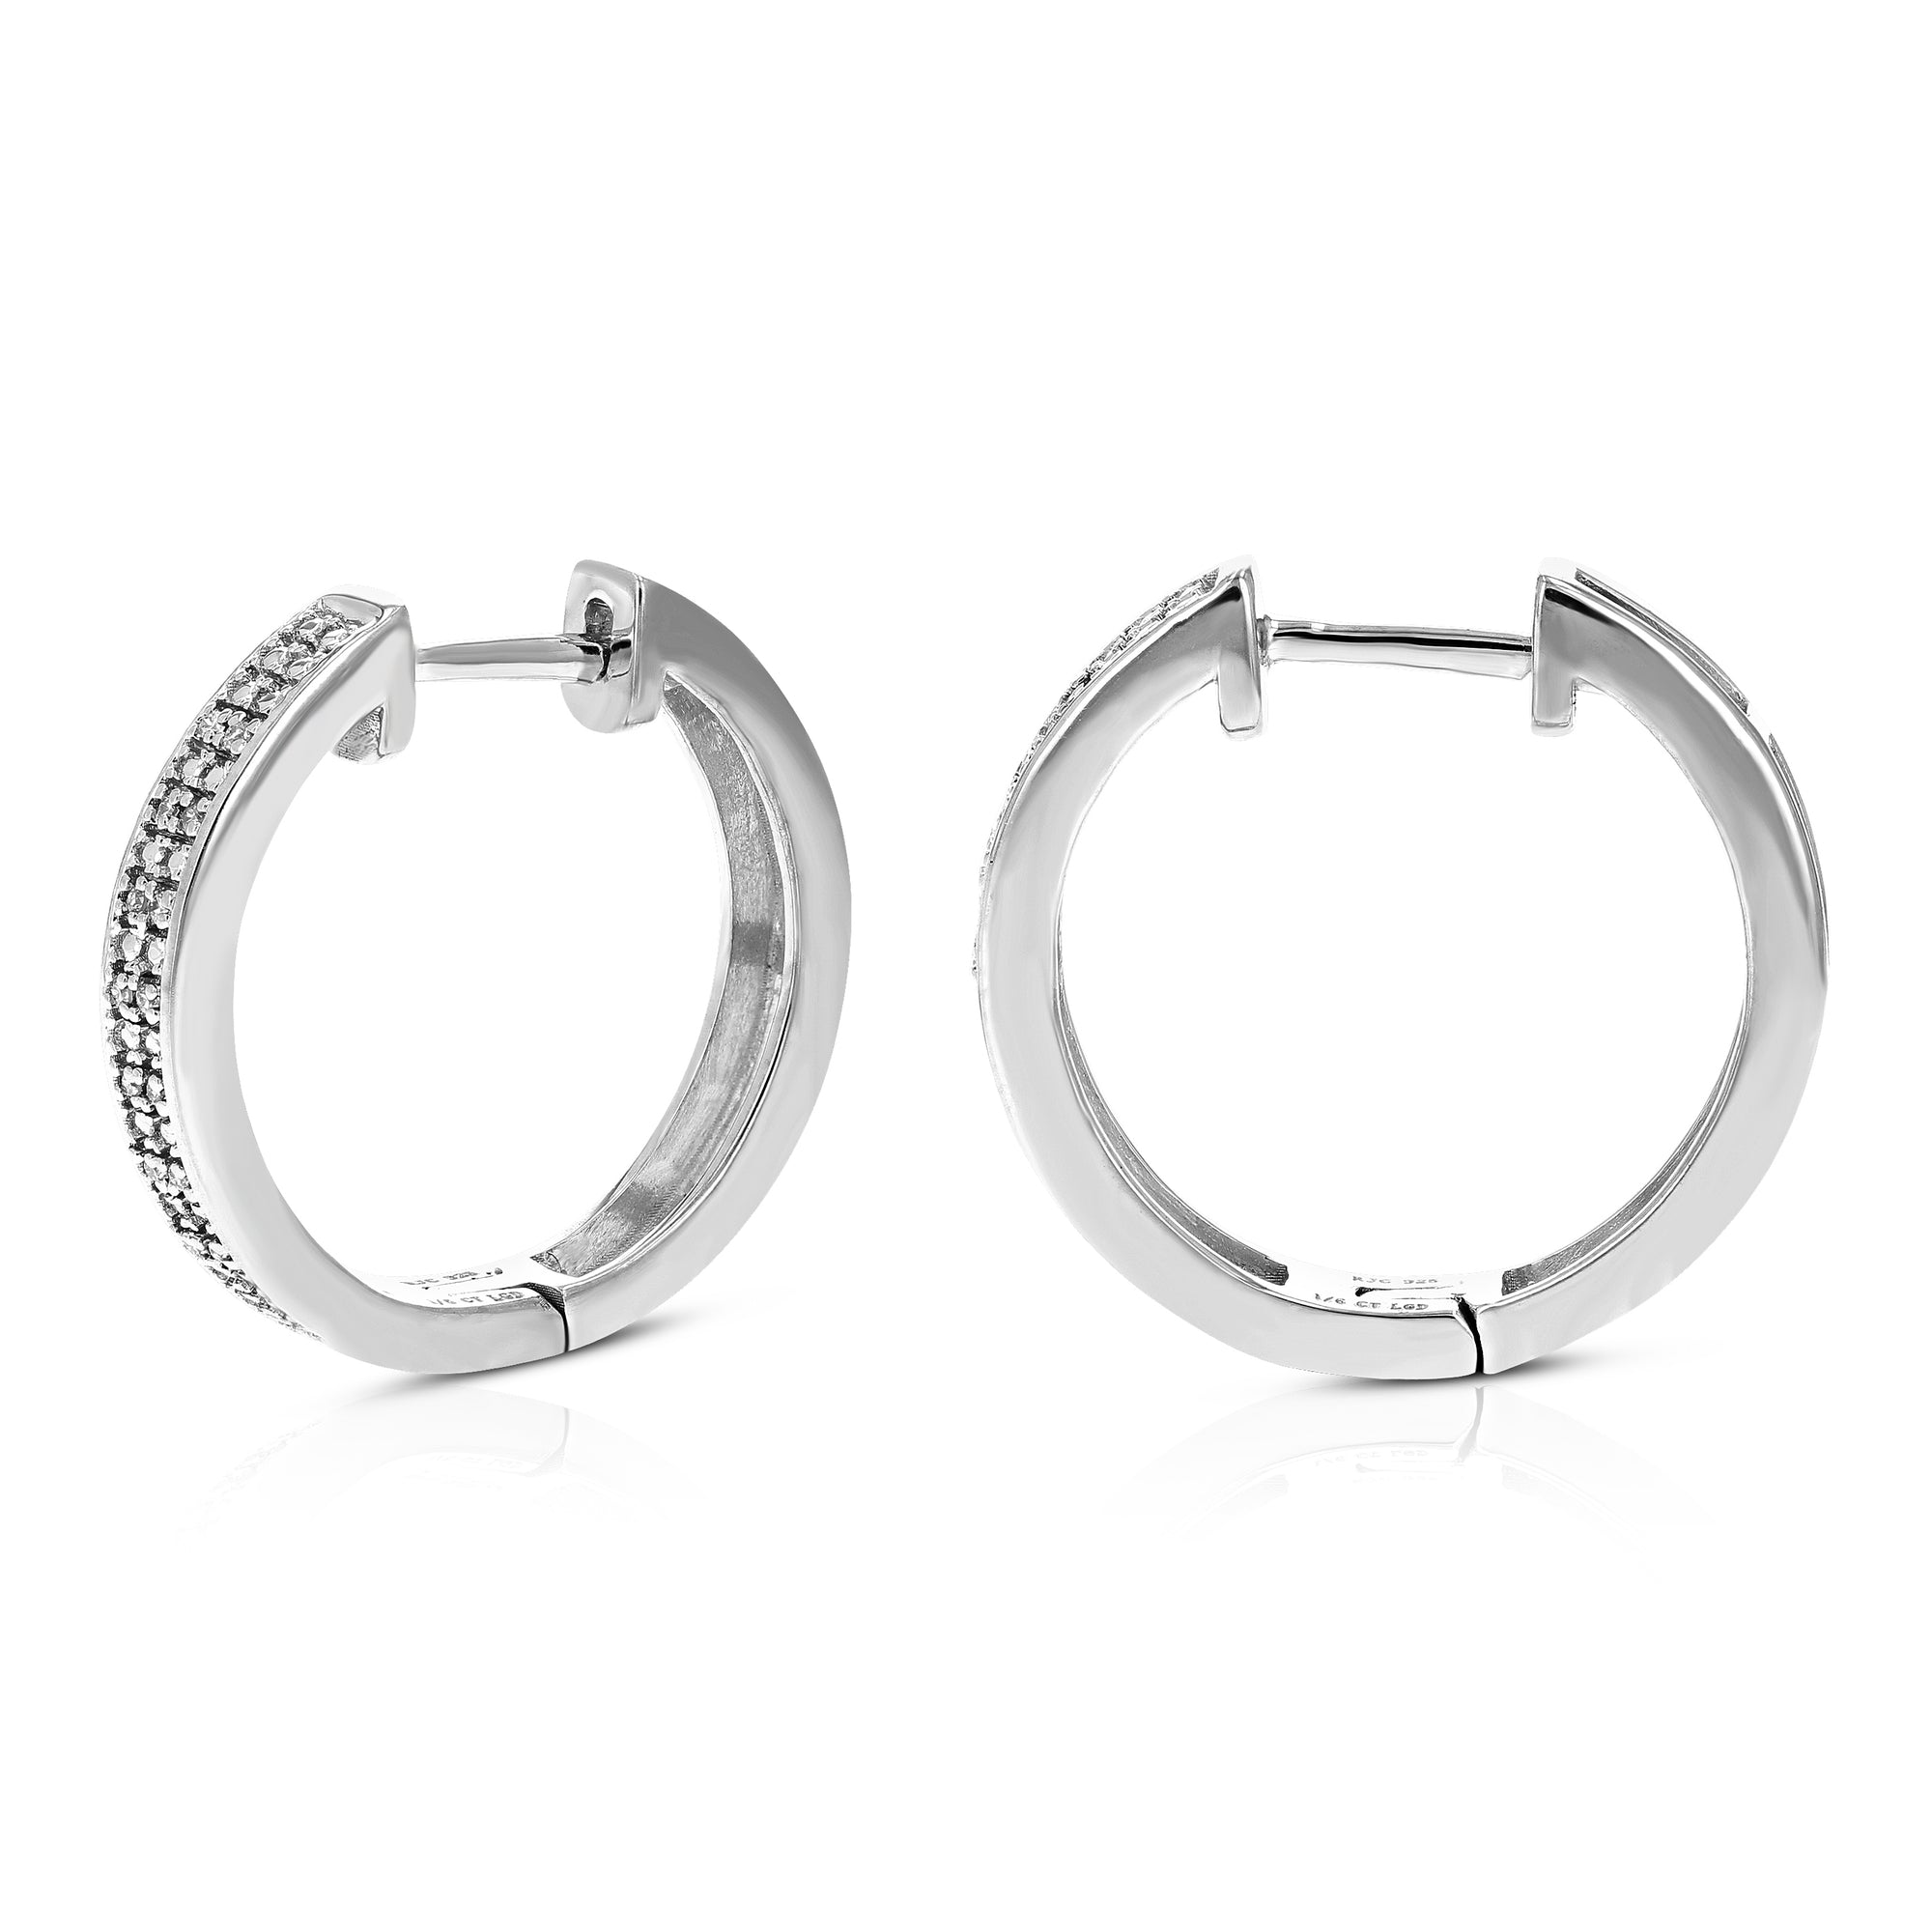 1/6 cttw Diamond Hoop Earrings for Women, Round Lab Grown Diamond Earrings in .925 Sterlinng Silver, Prong Setting, 3/4 Inch